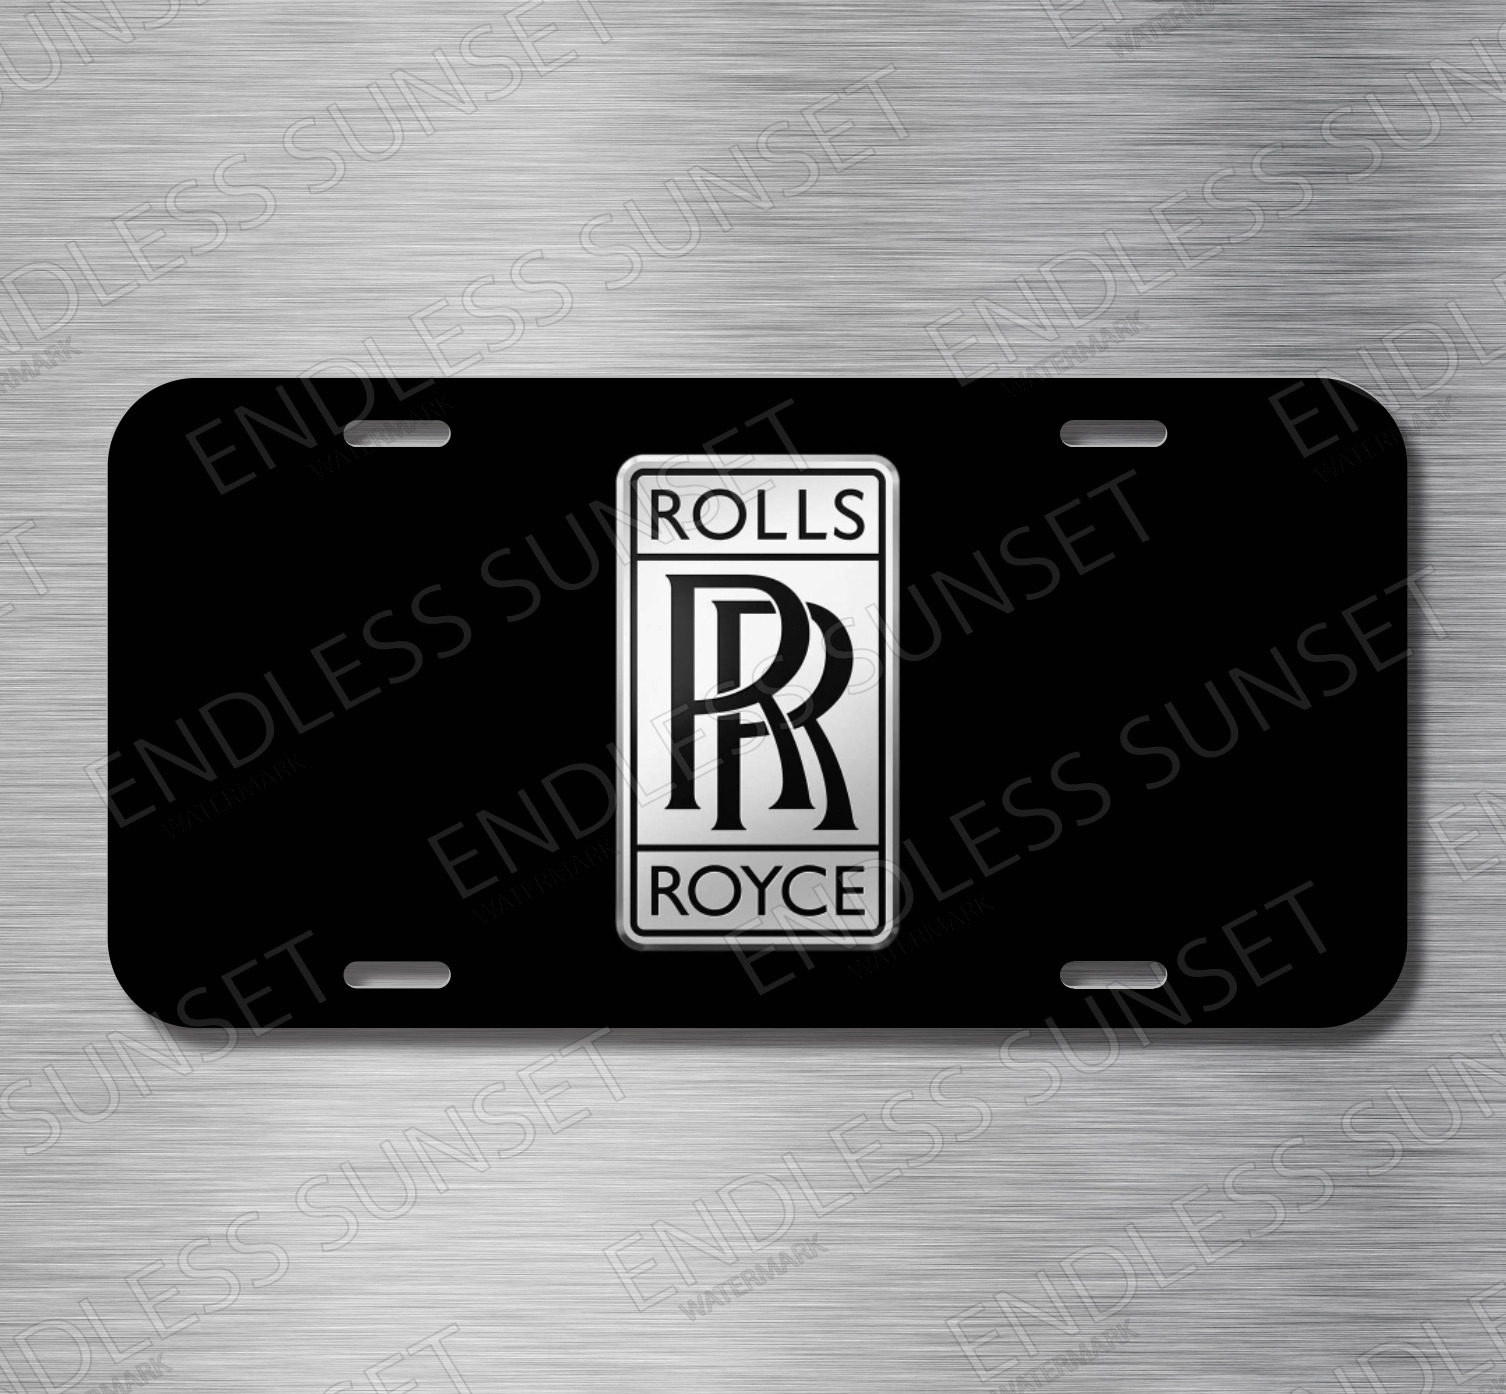 Rolls Royce Luxury Car Rolls-Royce License Plate Front Auto Tag